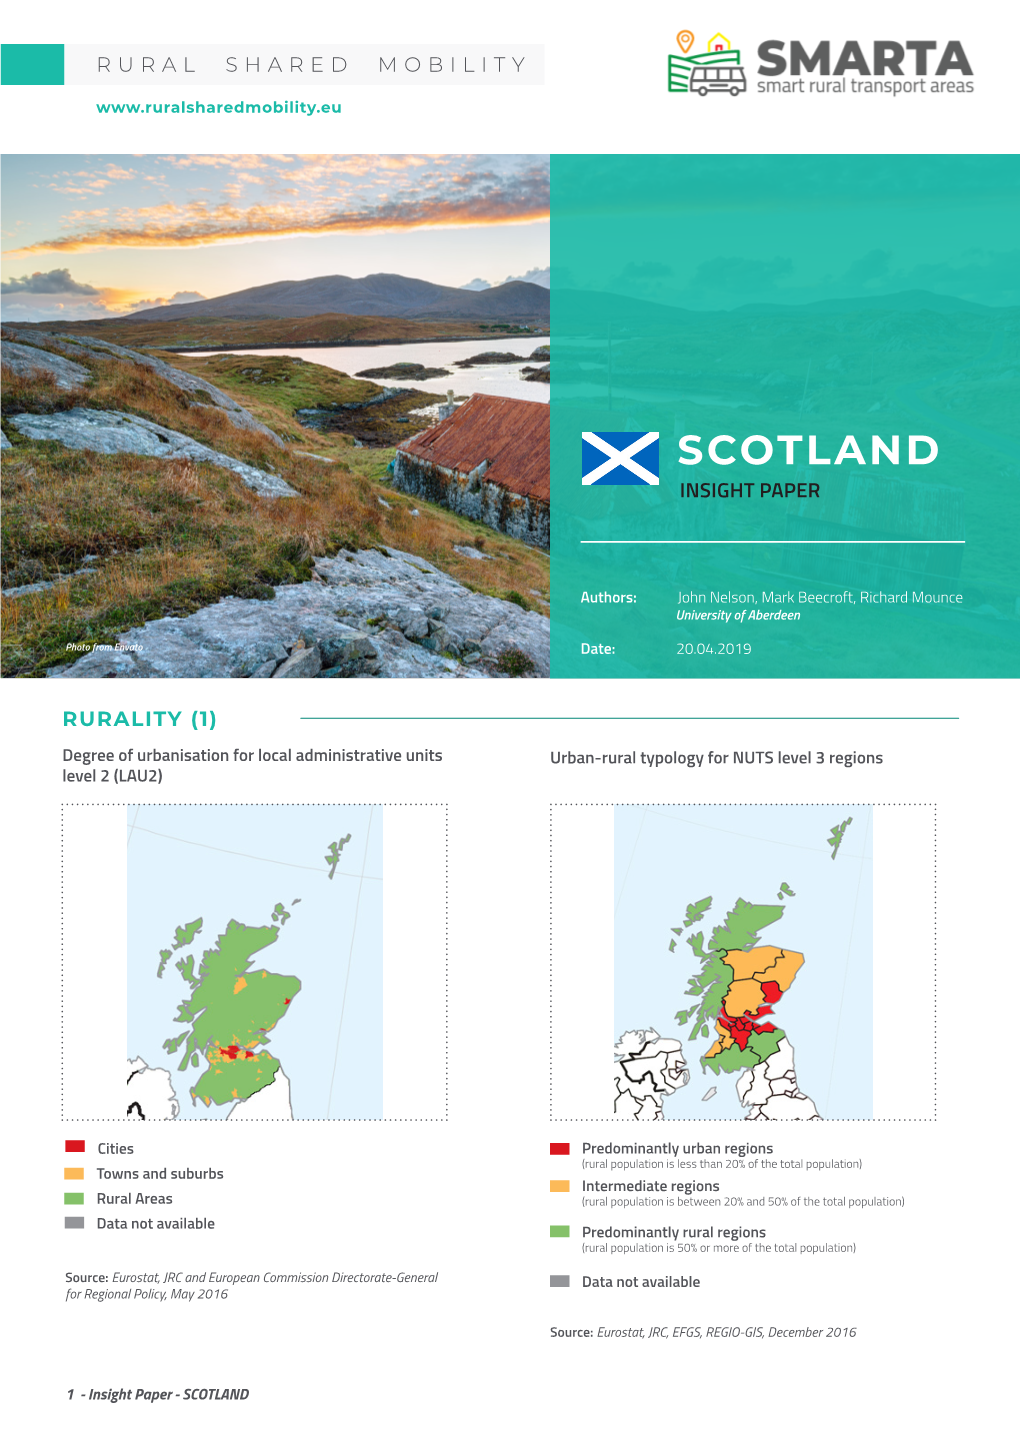 Scotland Insight Paper